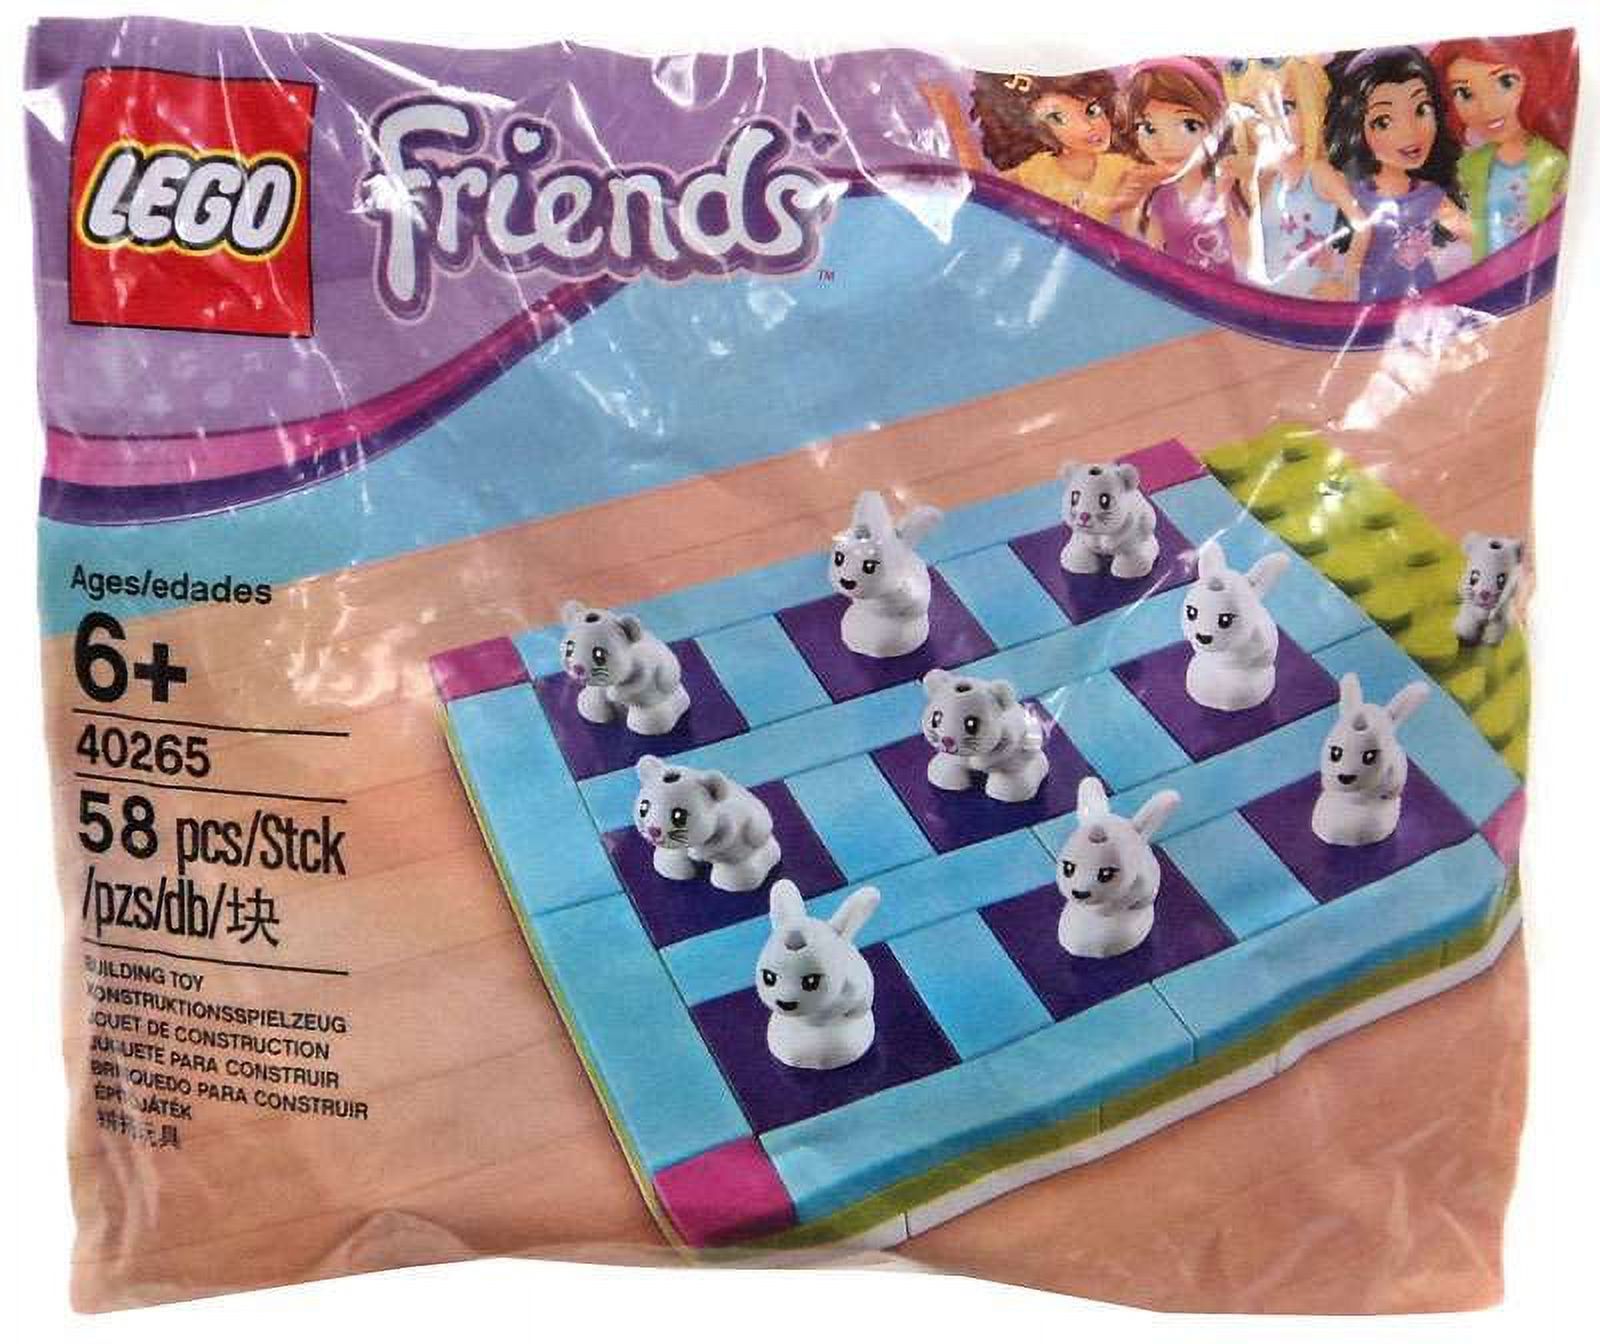 Friends Tic Tac Toe Mini Set LEGO 40265 [Bagged] - image 1 of 2